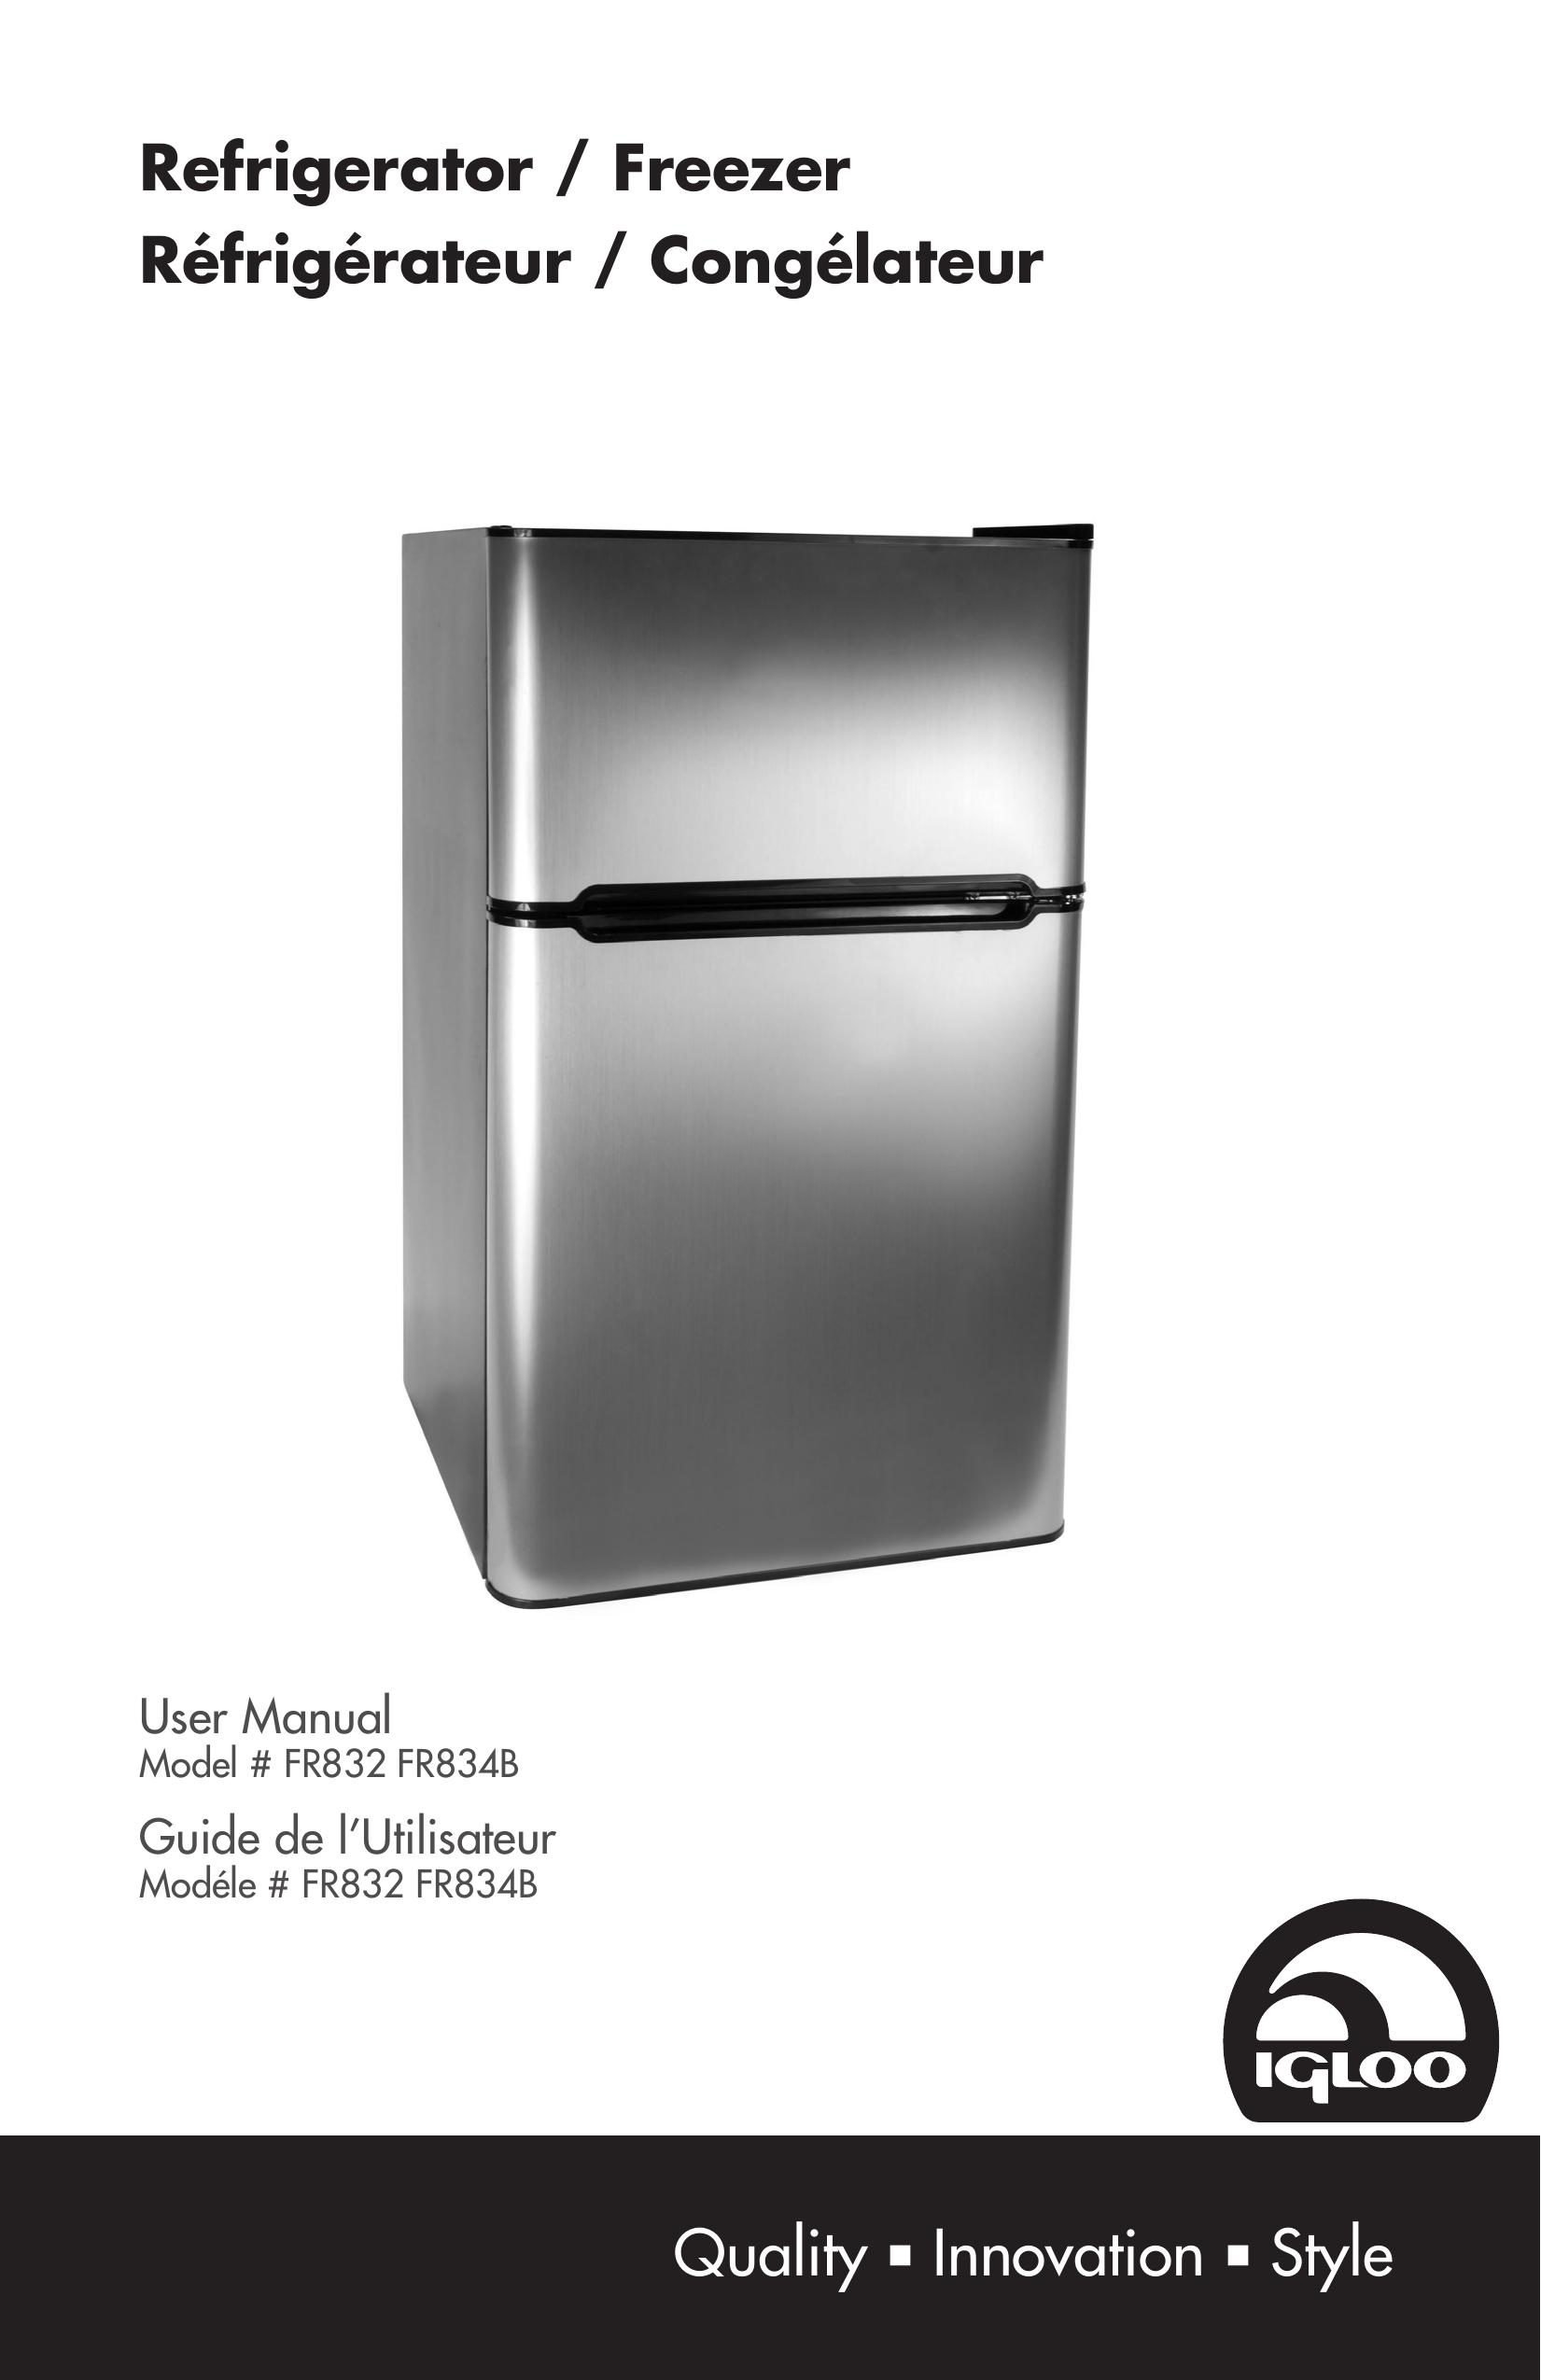 Igloo FR834B Refrigerator User Manual